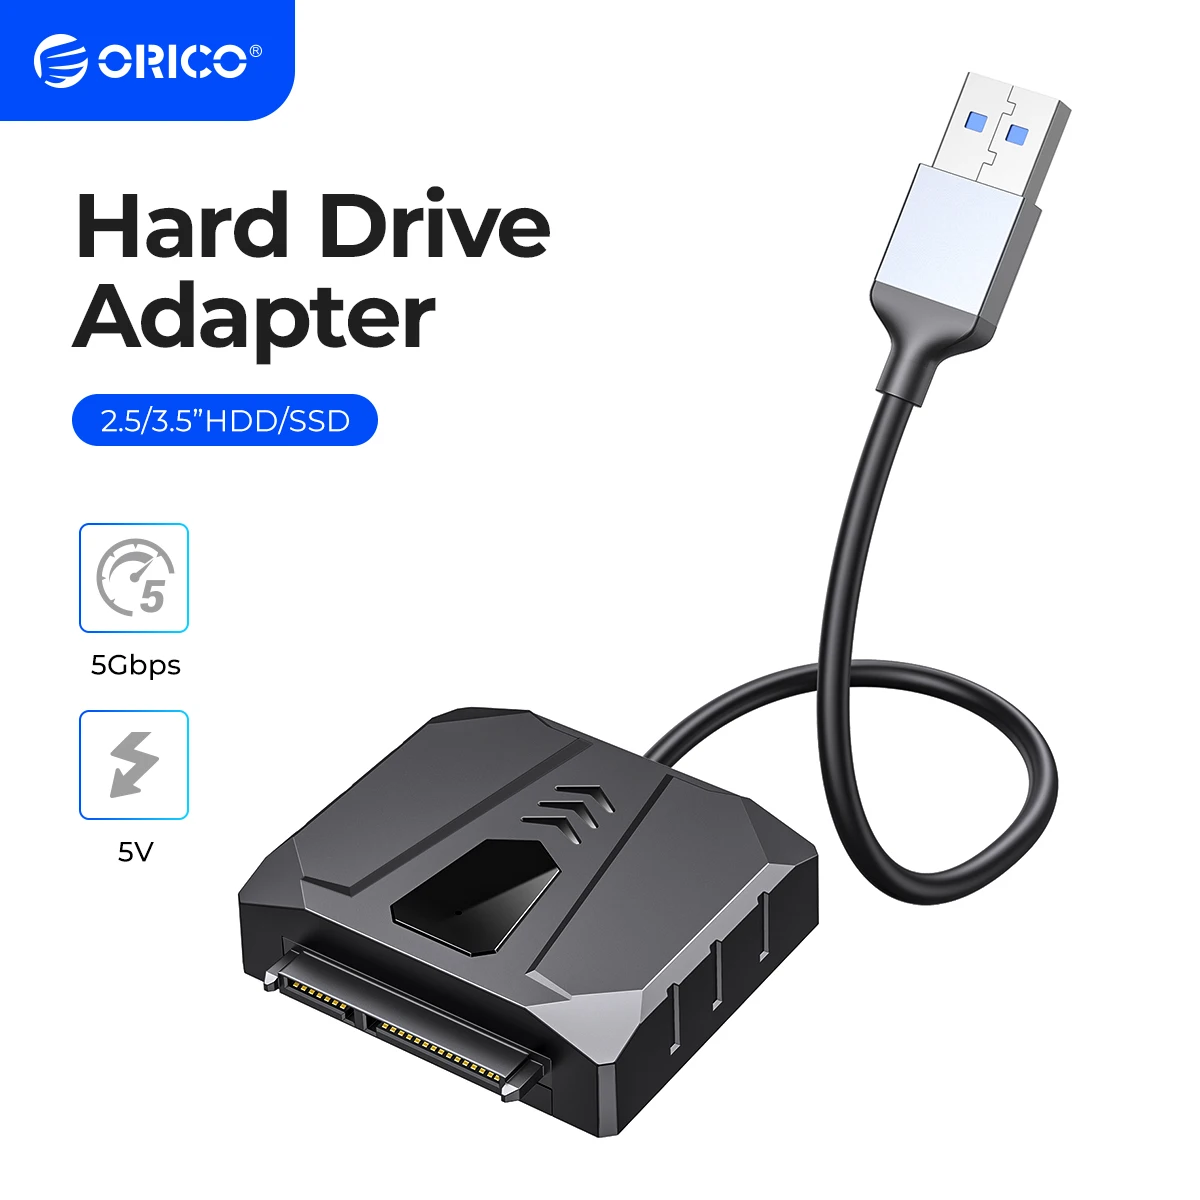 SATA Hard Drive to USB Adapter